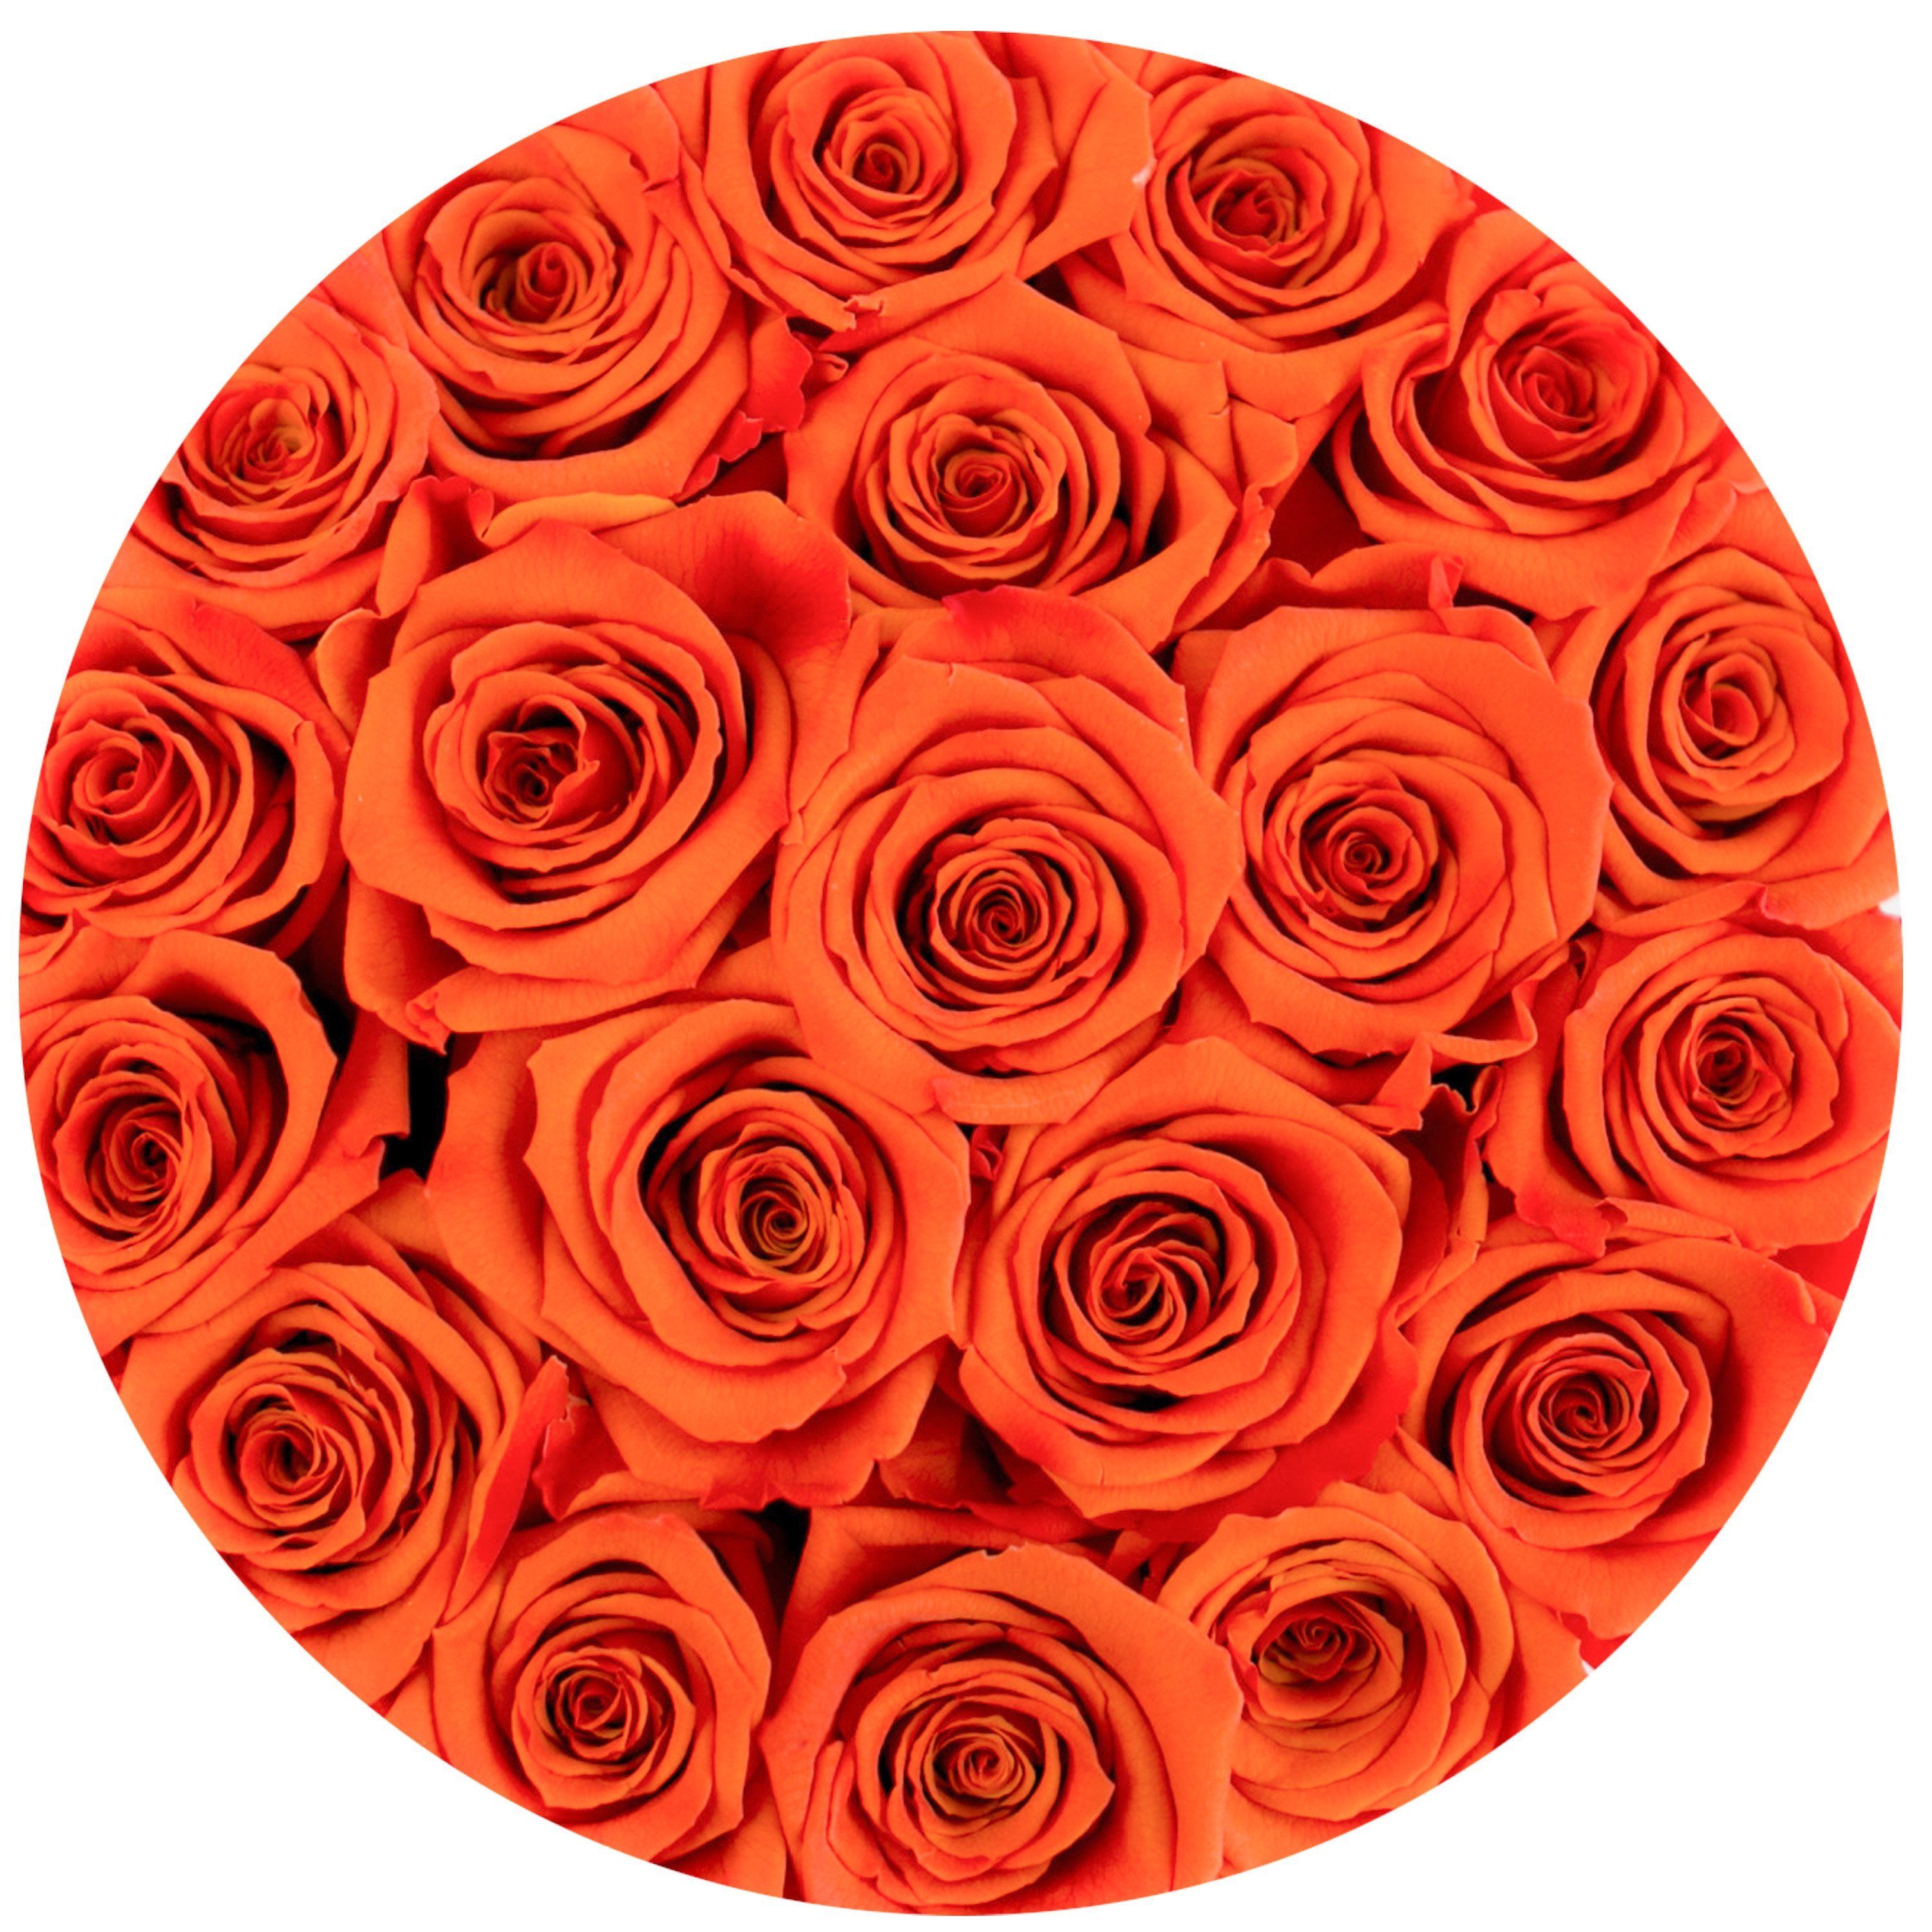 classic round box - gold - orange roses orange eternity roses - the million roses